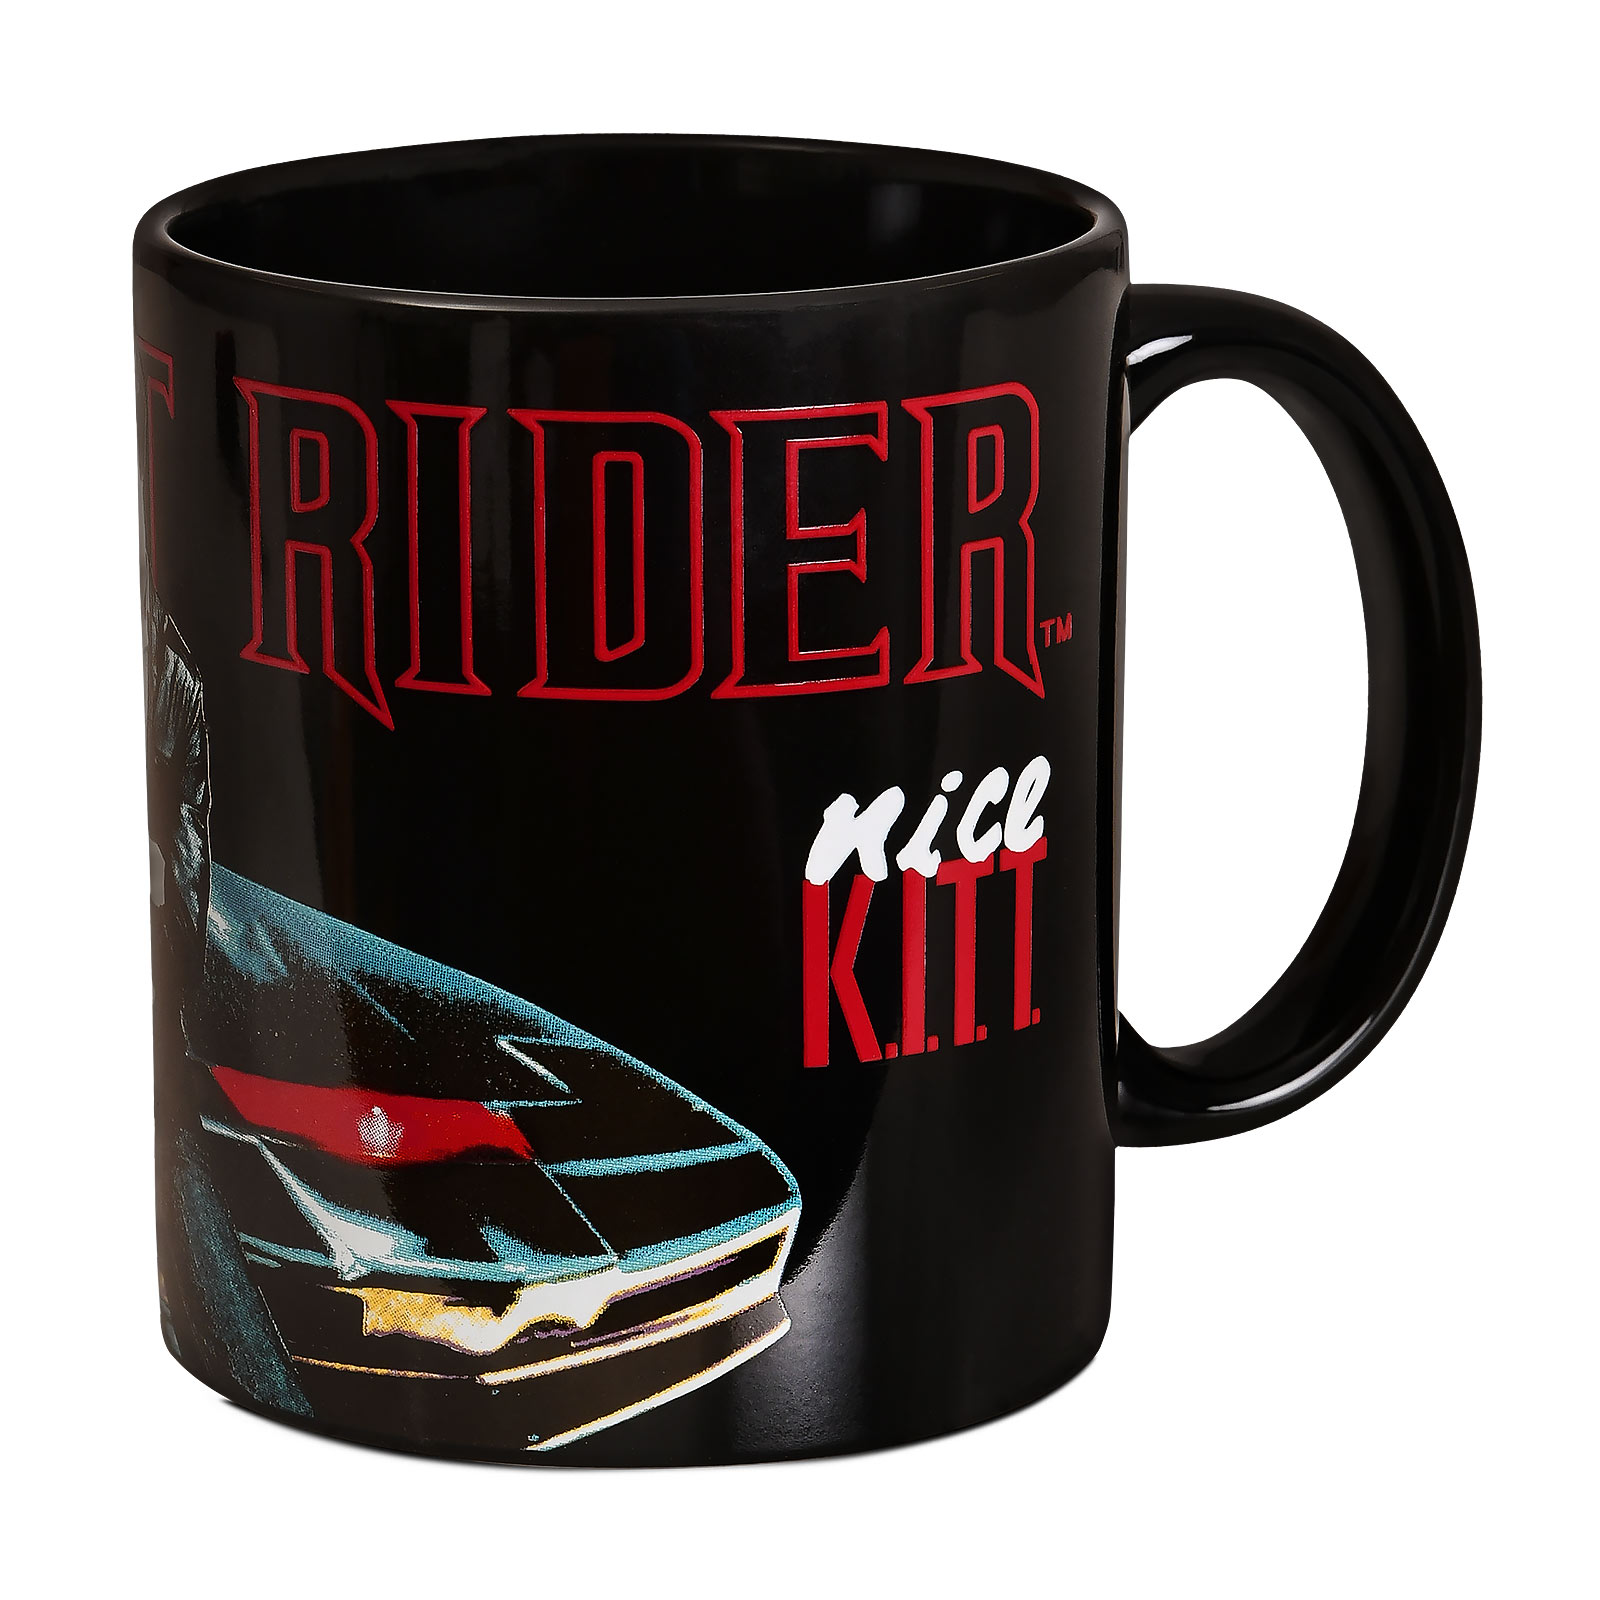 Knight Rider - Michael Knight and K.I.T.T. Mug